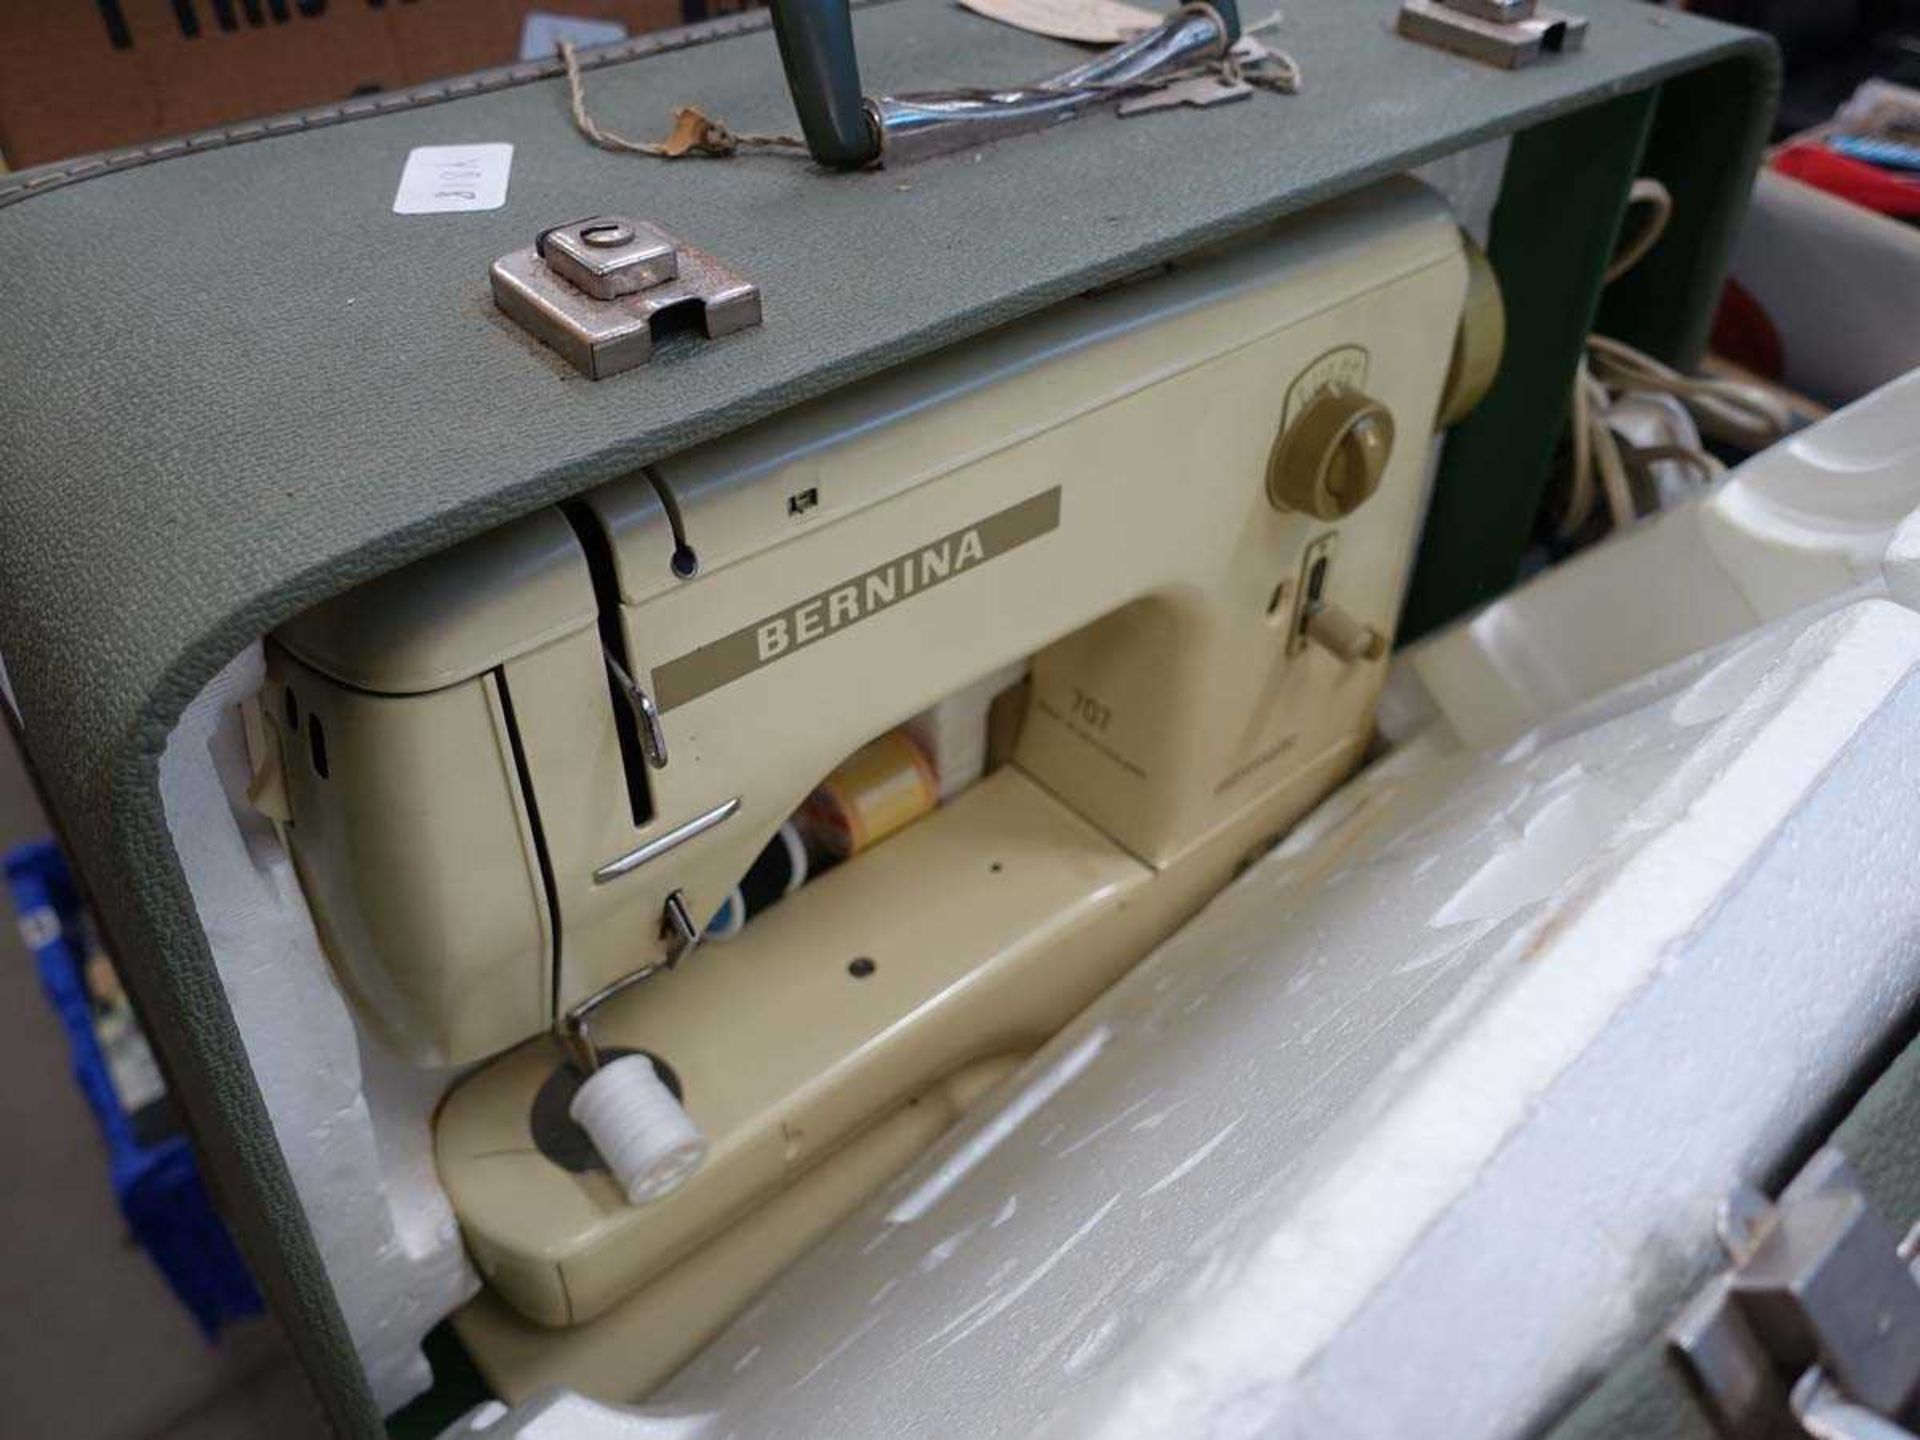 Cased Bernina sewing machine